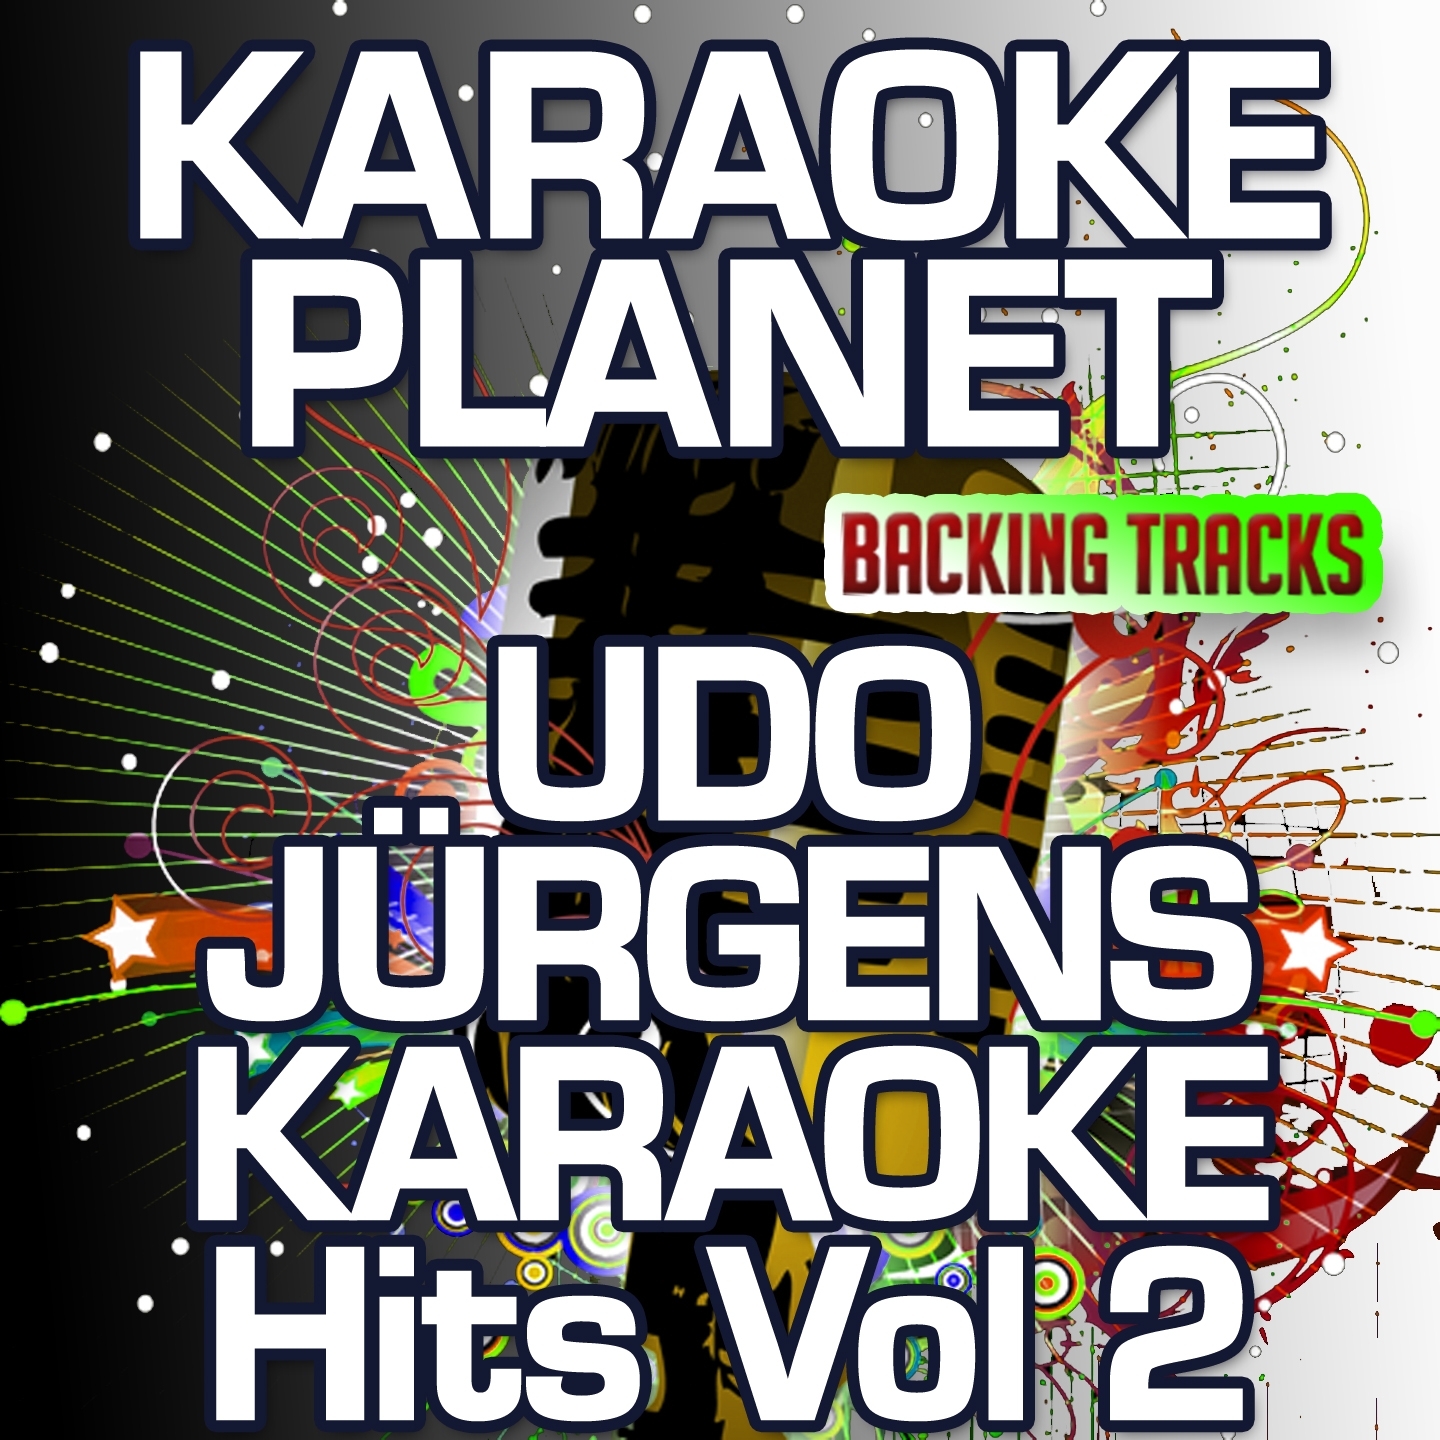 Udo Jü rgens Karaoke Hits, Vol. 2